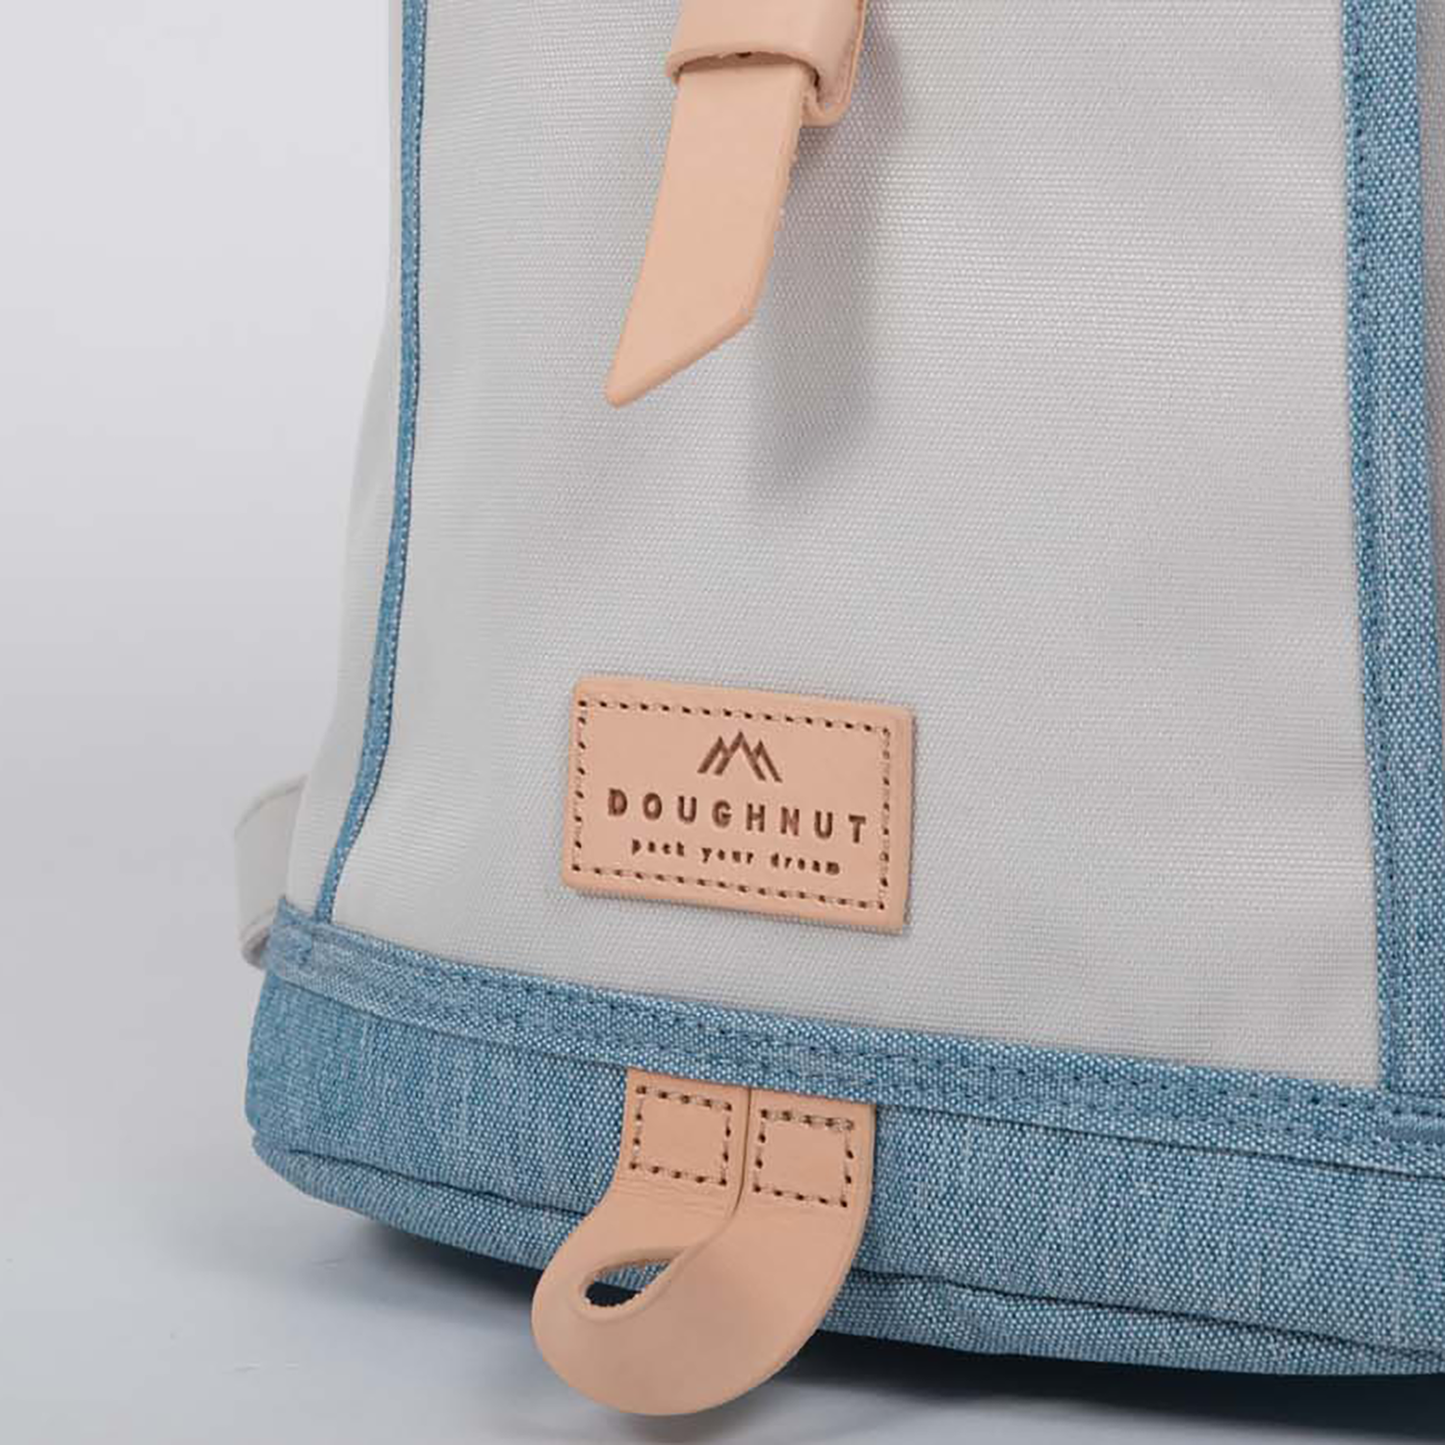 Cambridge Mini Backpack